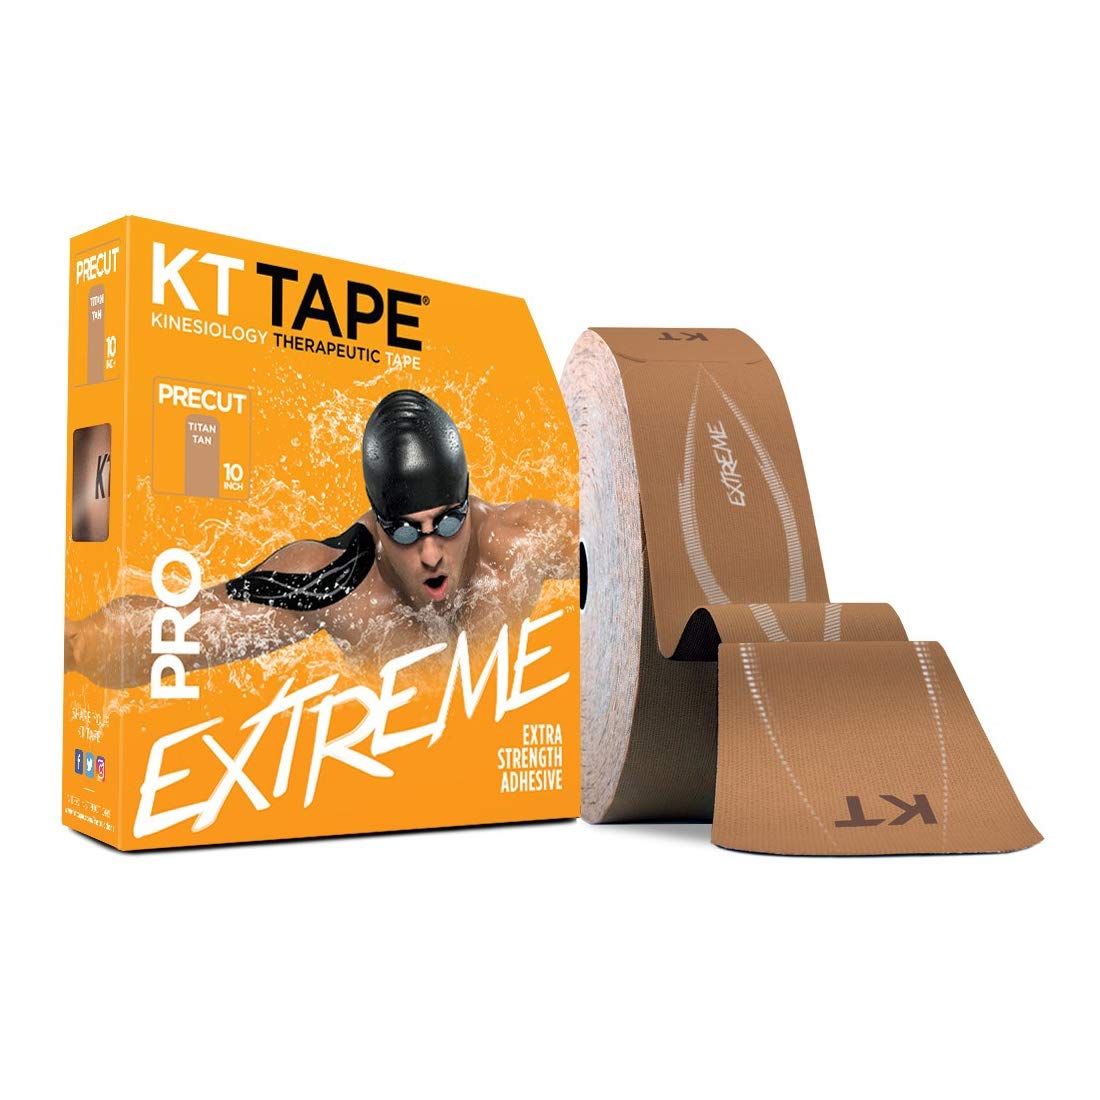 KT Tape Pro 10 Precut Kinesiology Therapeutic Elastic Sports Roll